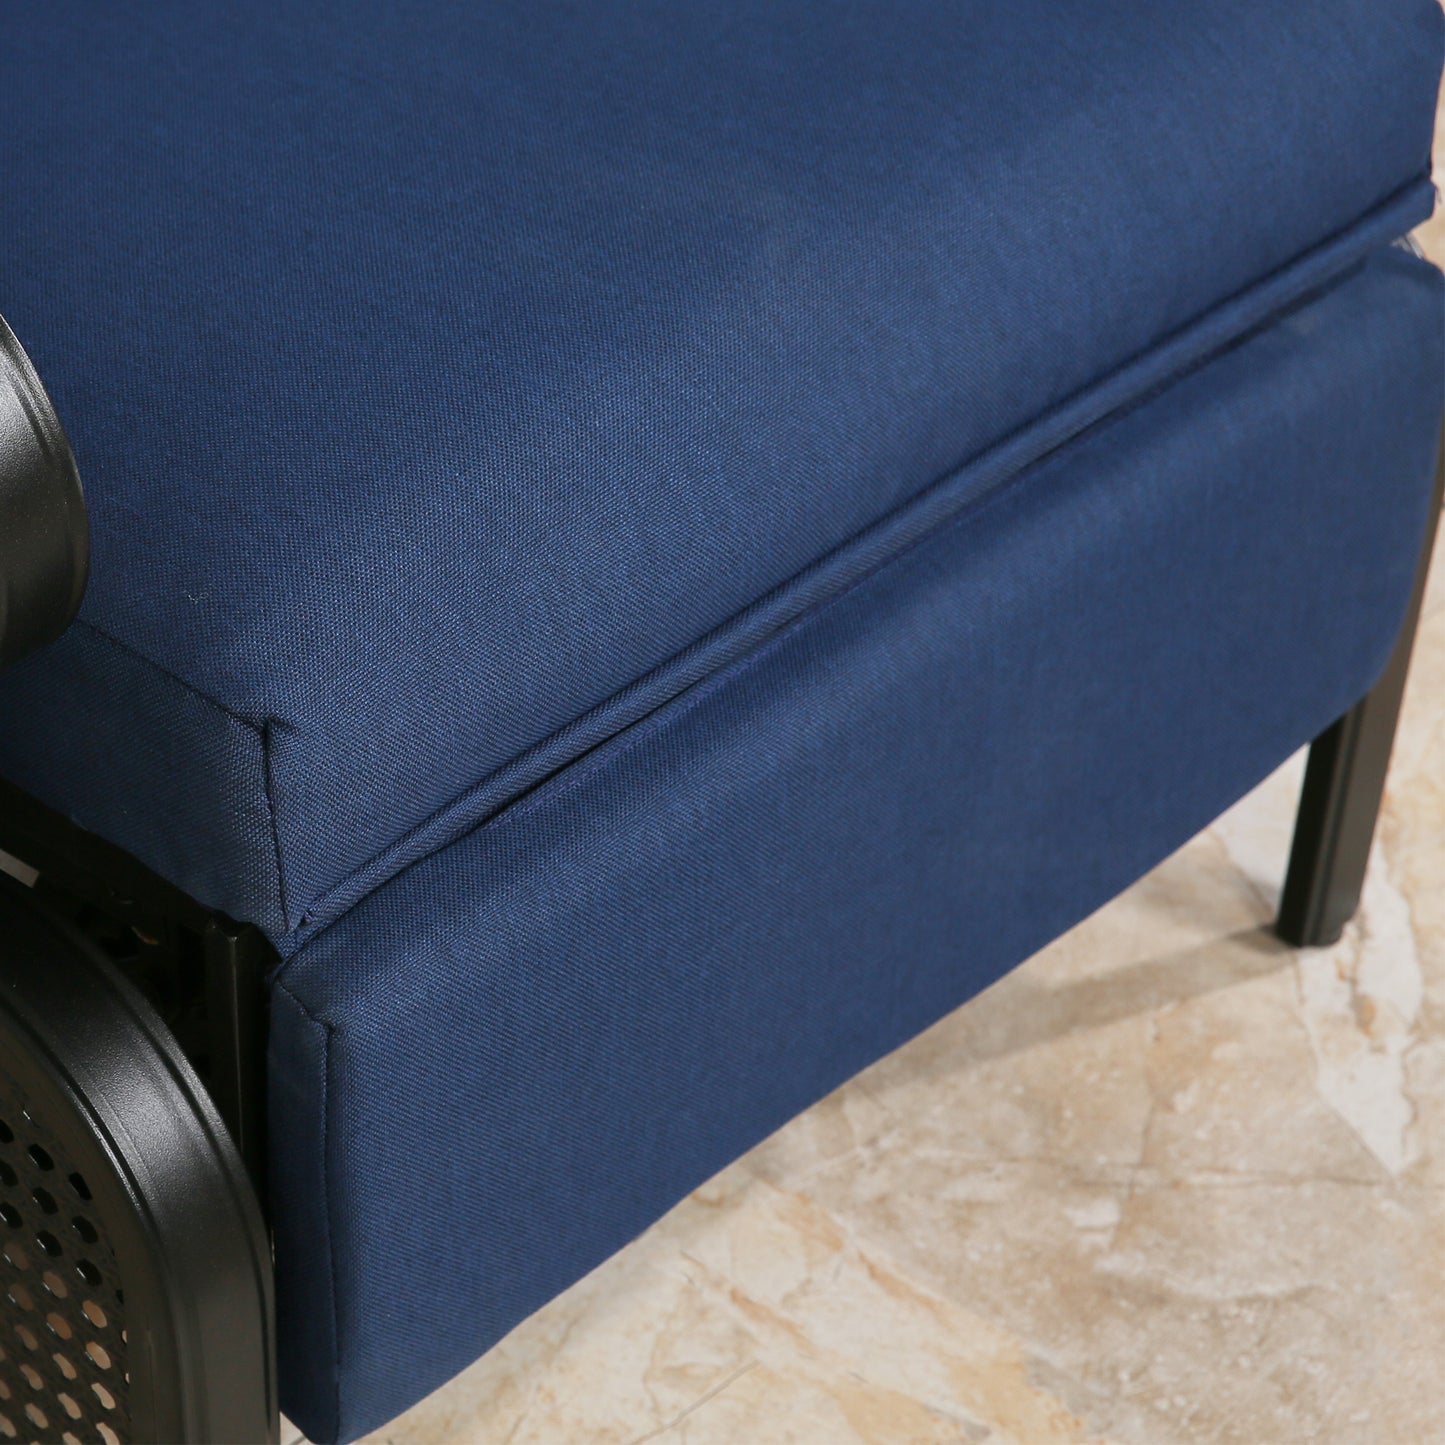 Cushion for Recliner Model#970237N